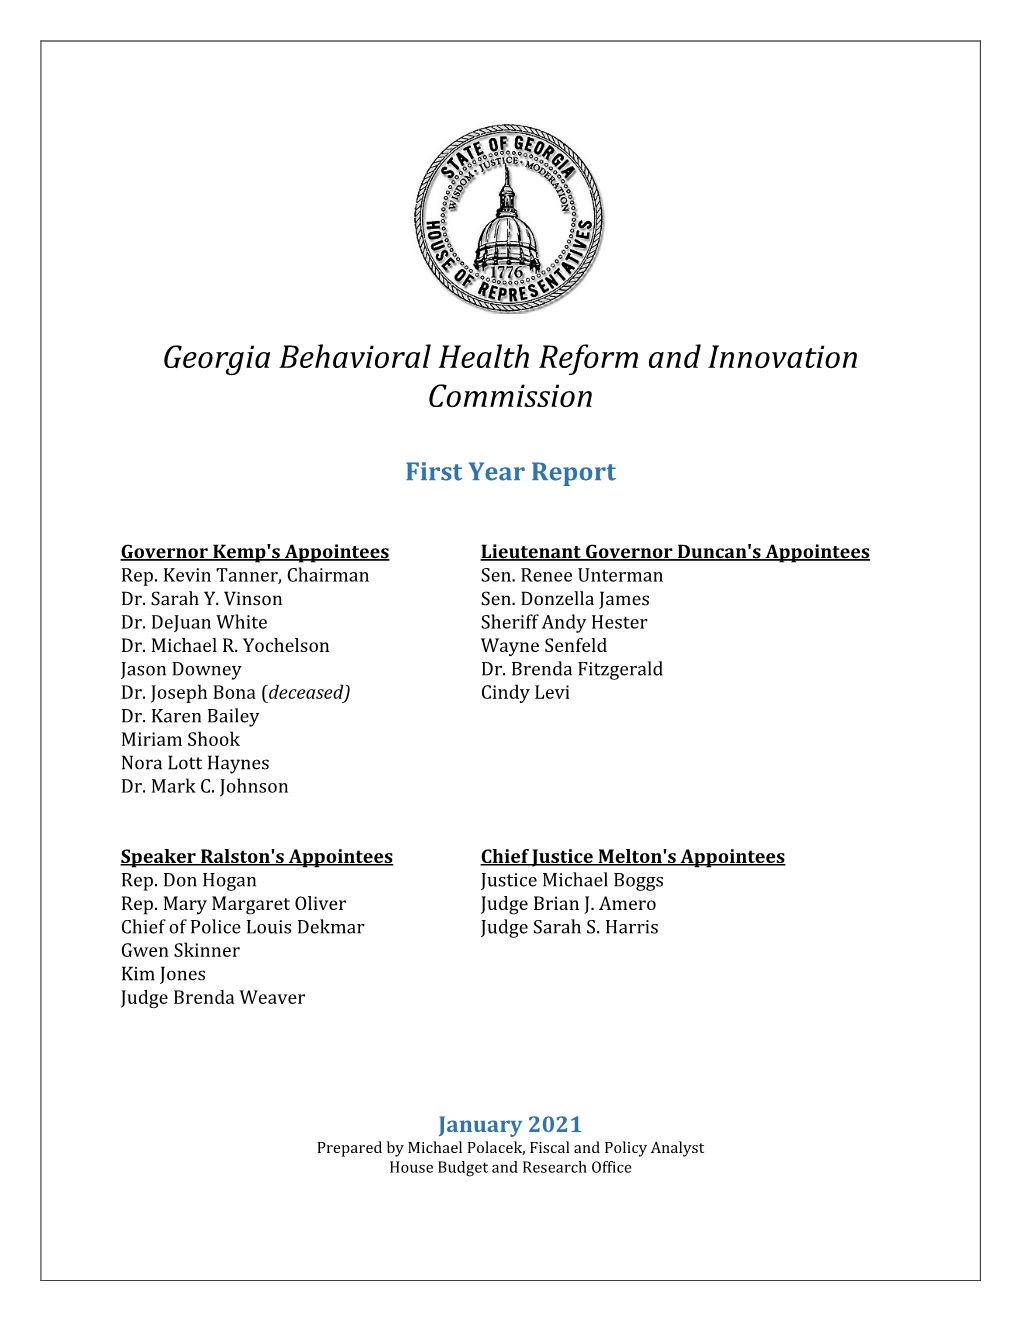 Georgia Behavioral Health Reform and Innovation Commission